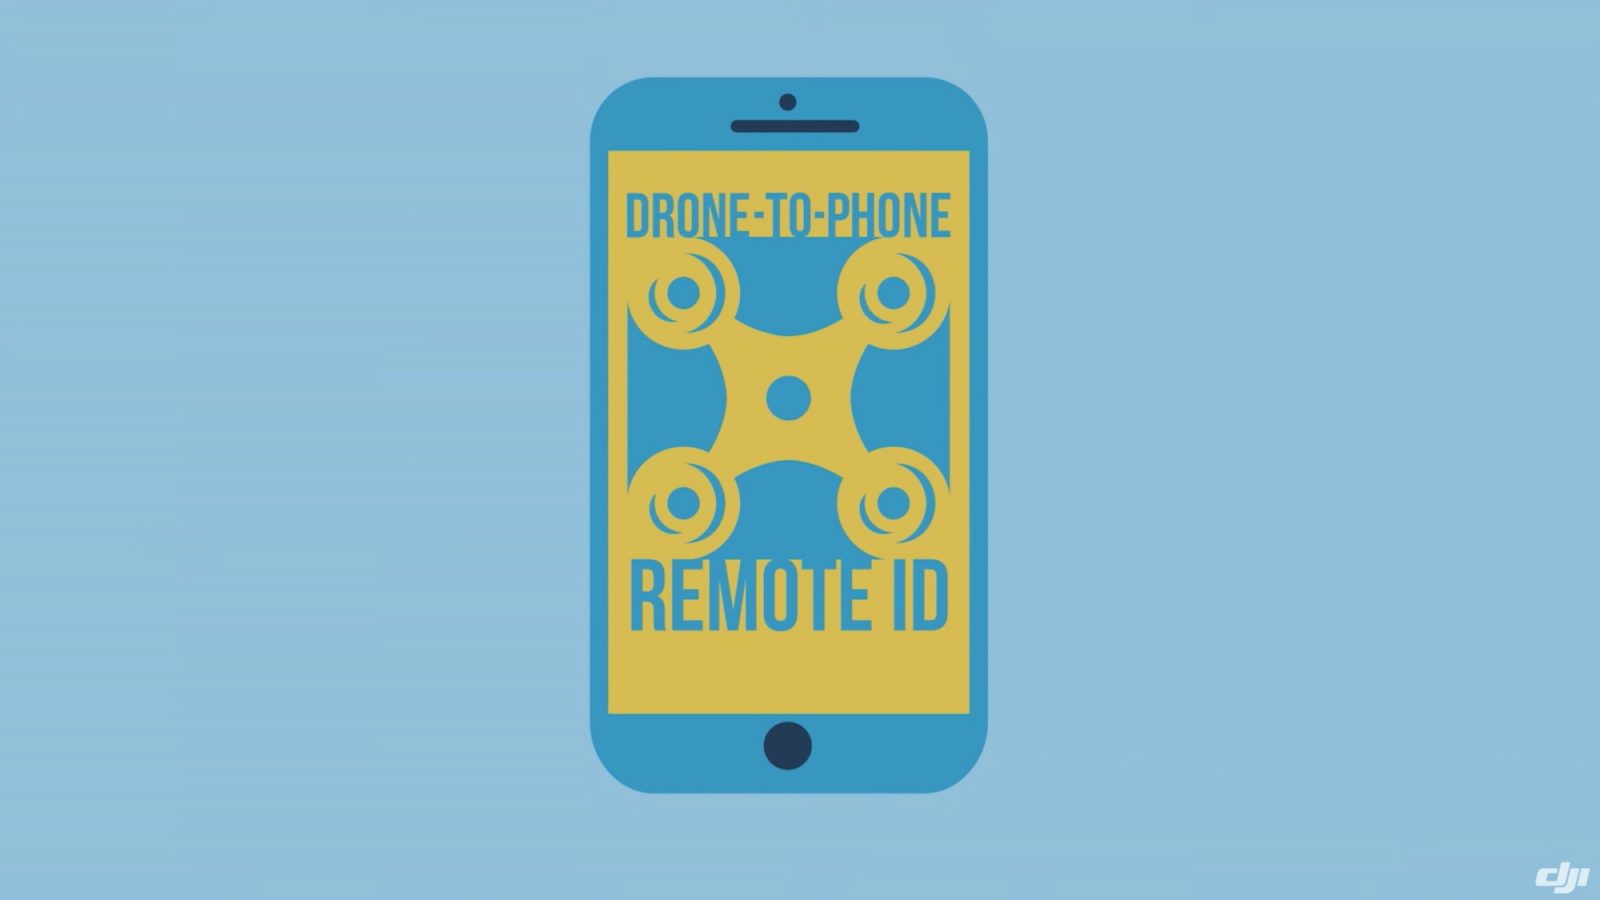 DJI's Drone-To-Phone Broadcast Remote ID